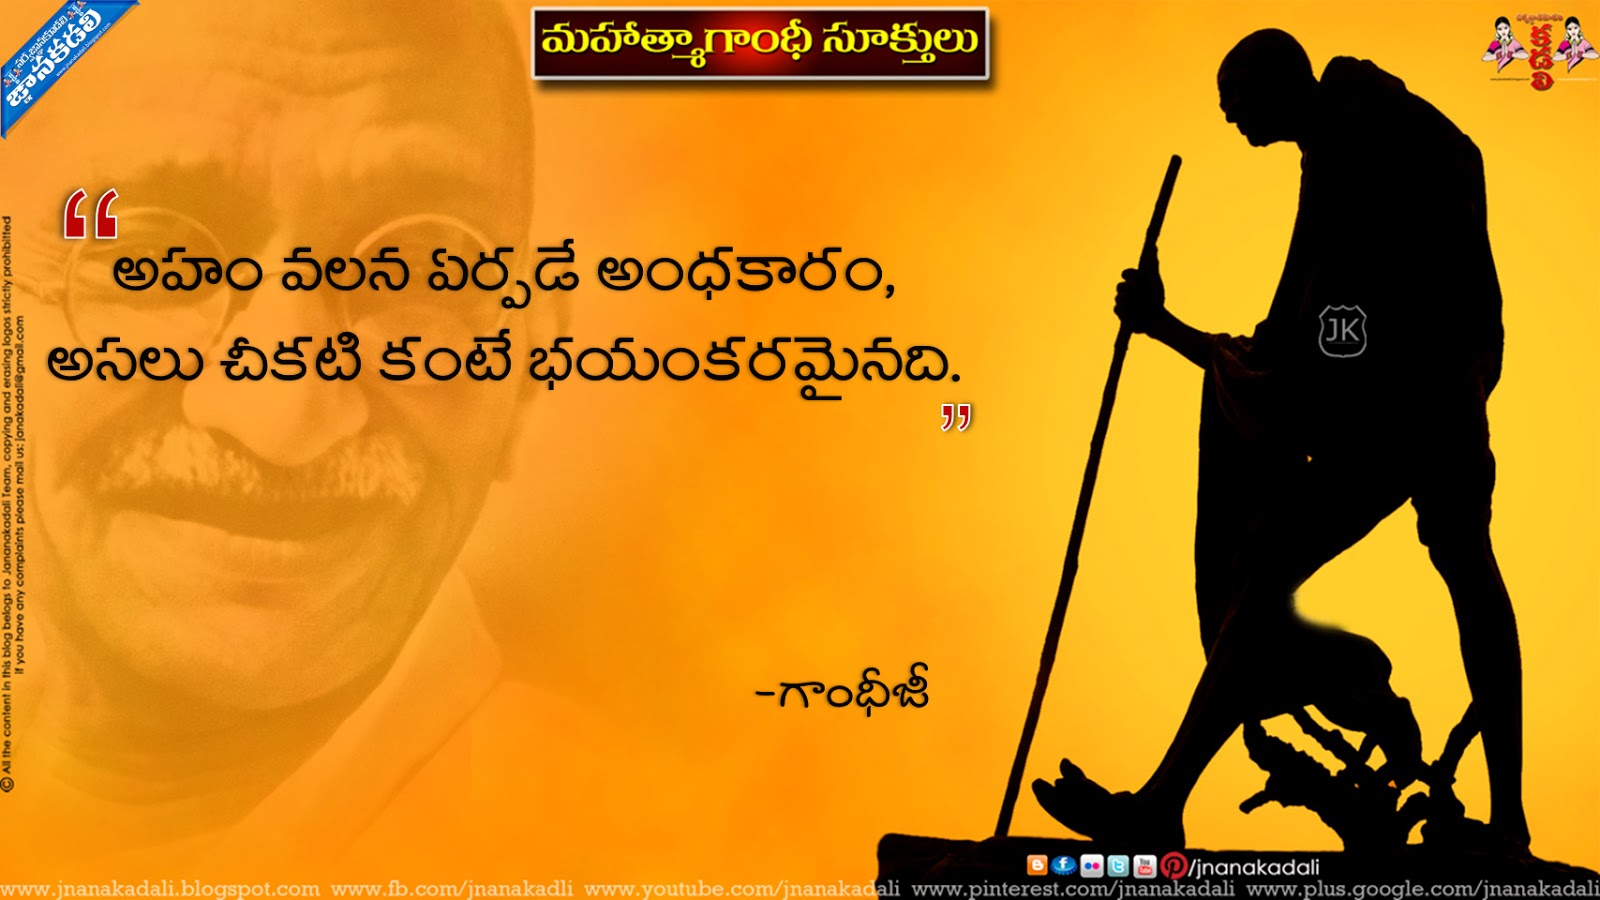 Here is a Telugu Language nice Inspiring Gandhi Sayings about Everything possible Nice Telugu Language Life Quotations and Messages Free Popular Gandhiji